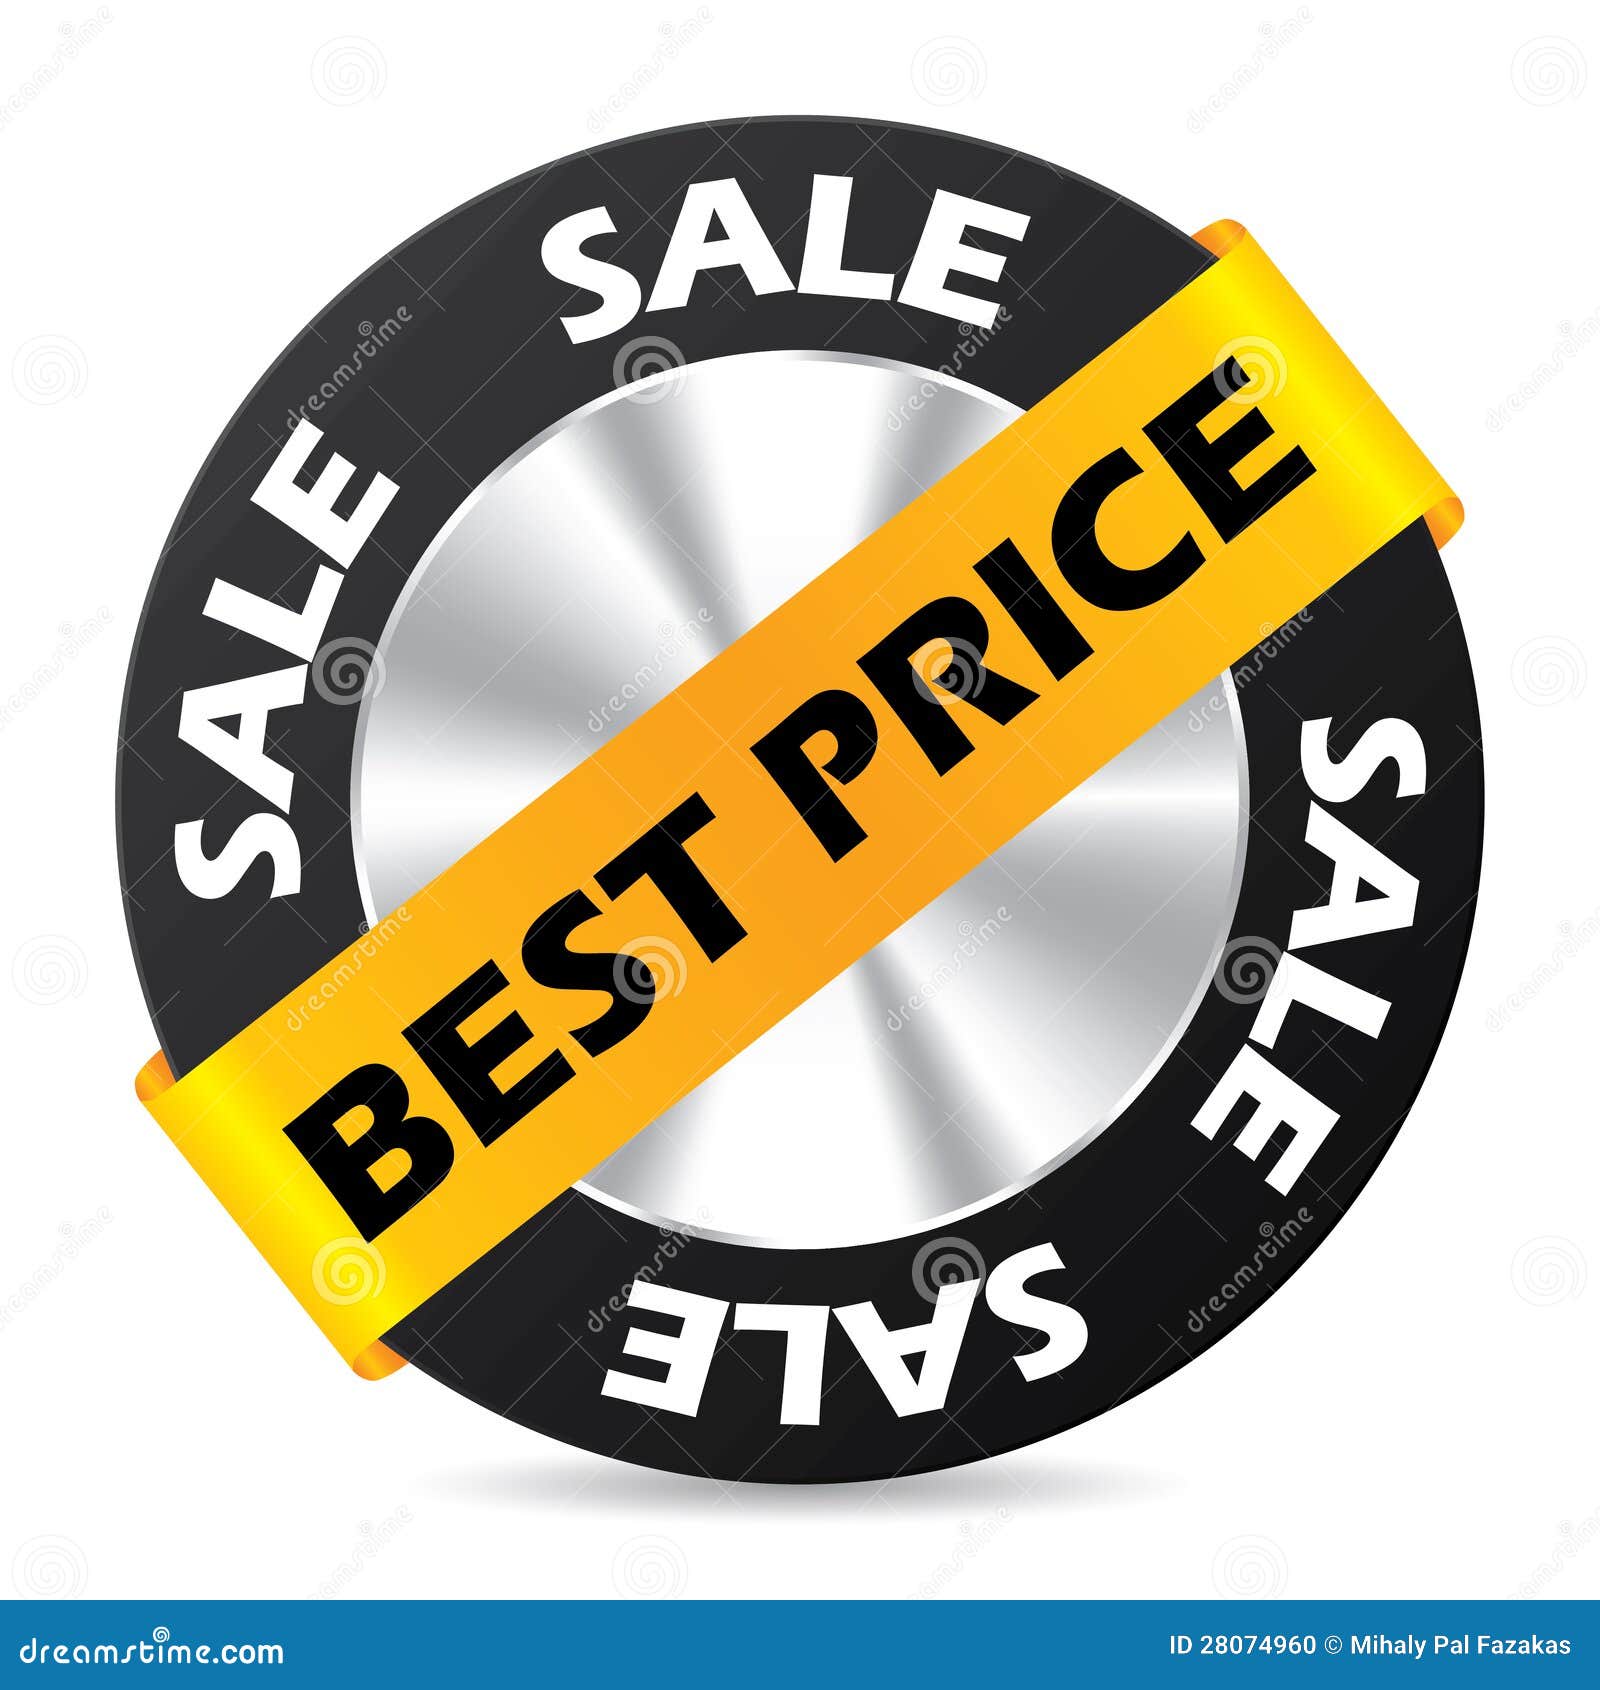 Best Price Badge Design Stock Photo - Image: 28074960